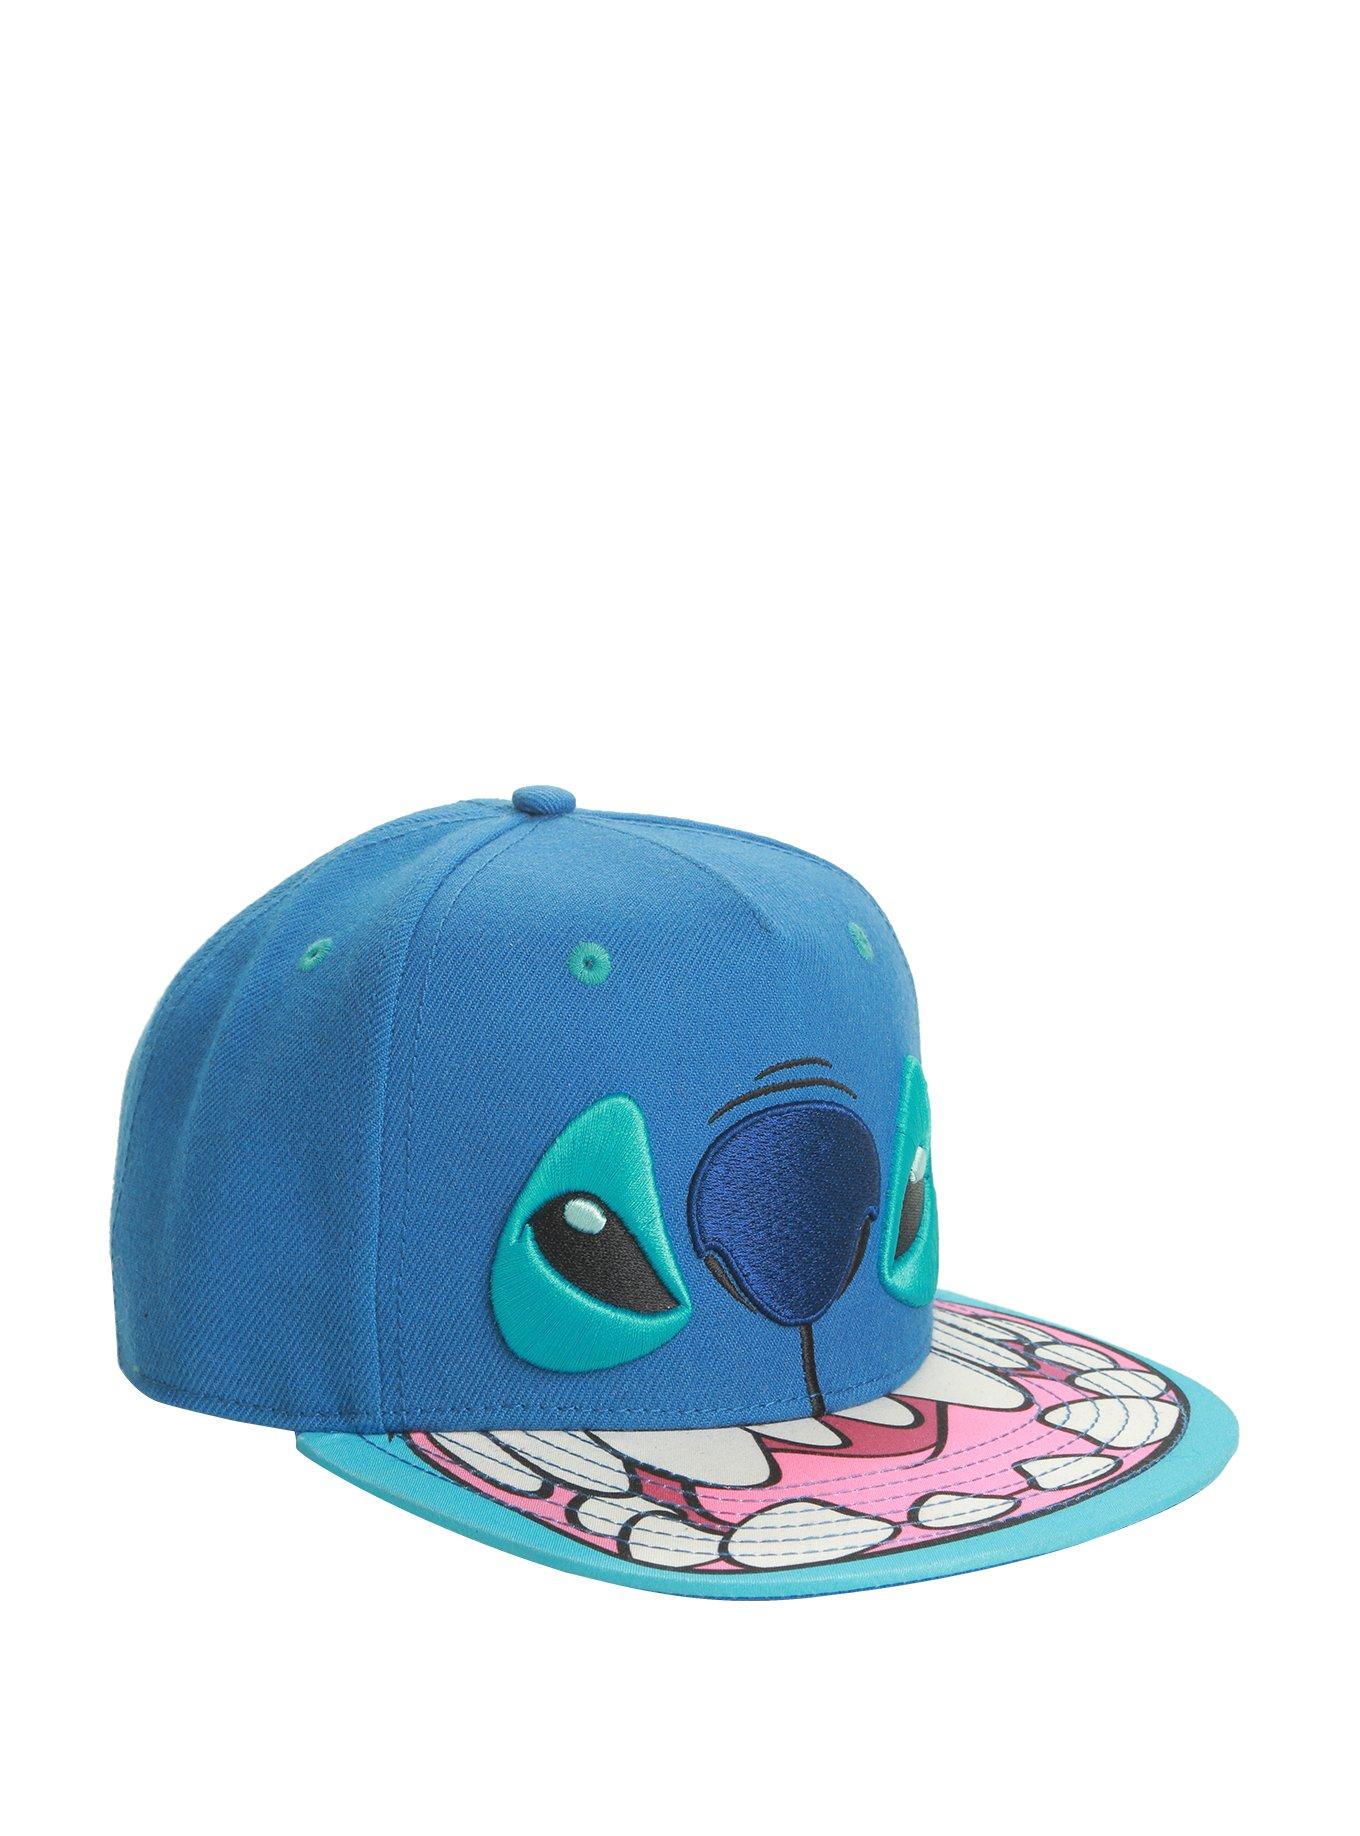 Disney Lilo & Stitch Big Face Snapback Hat | Hot Topic